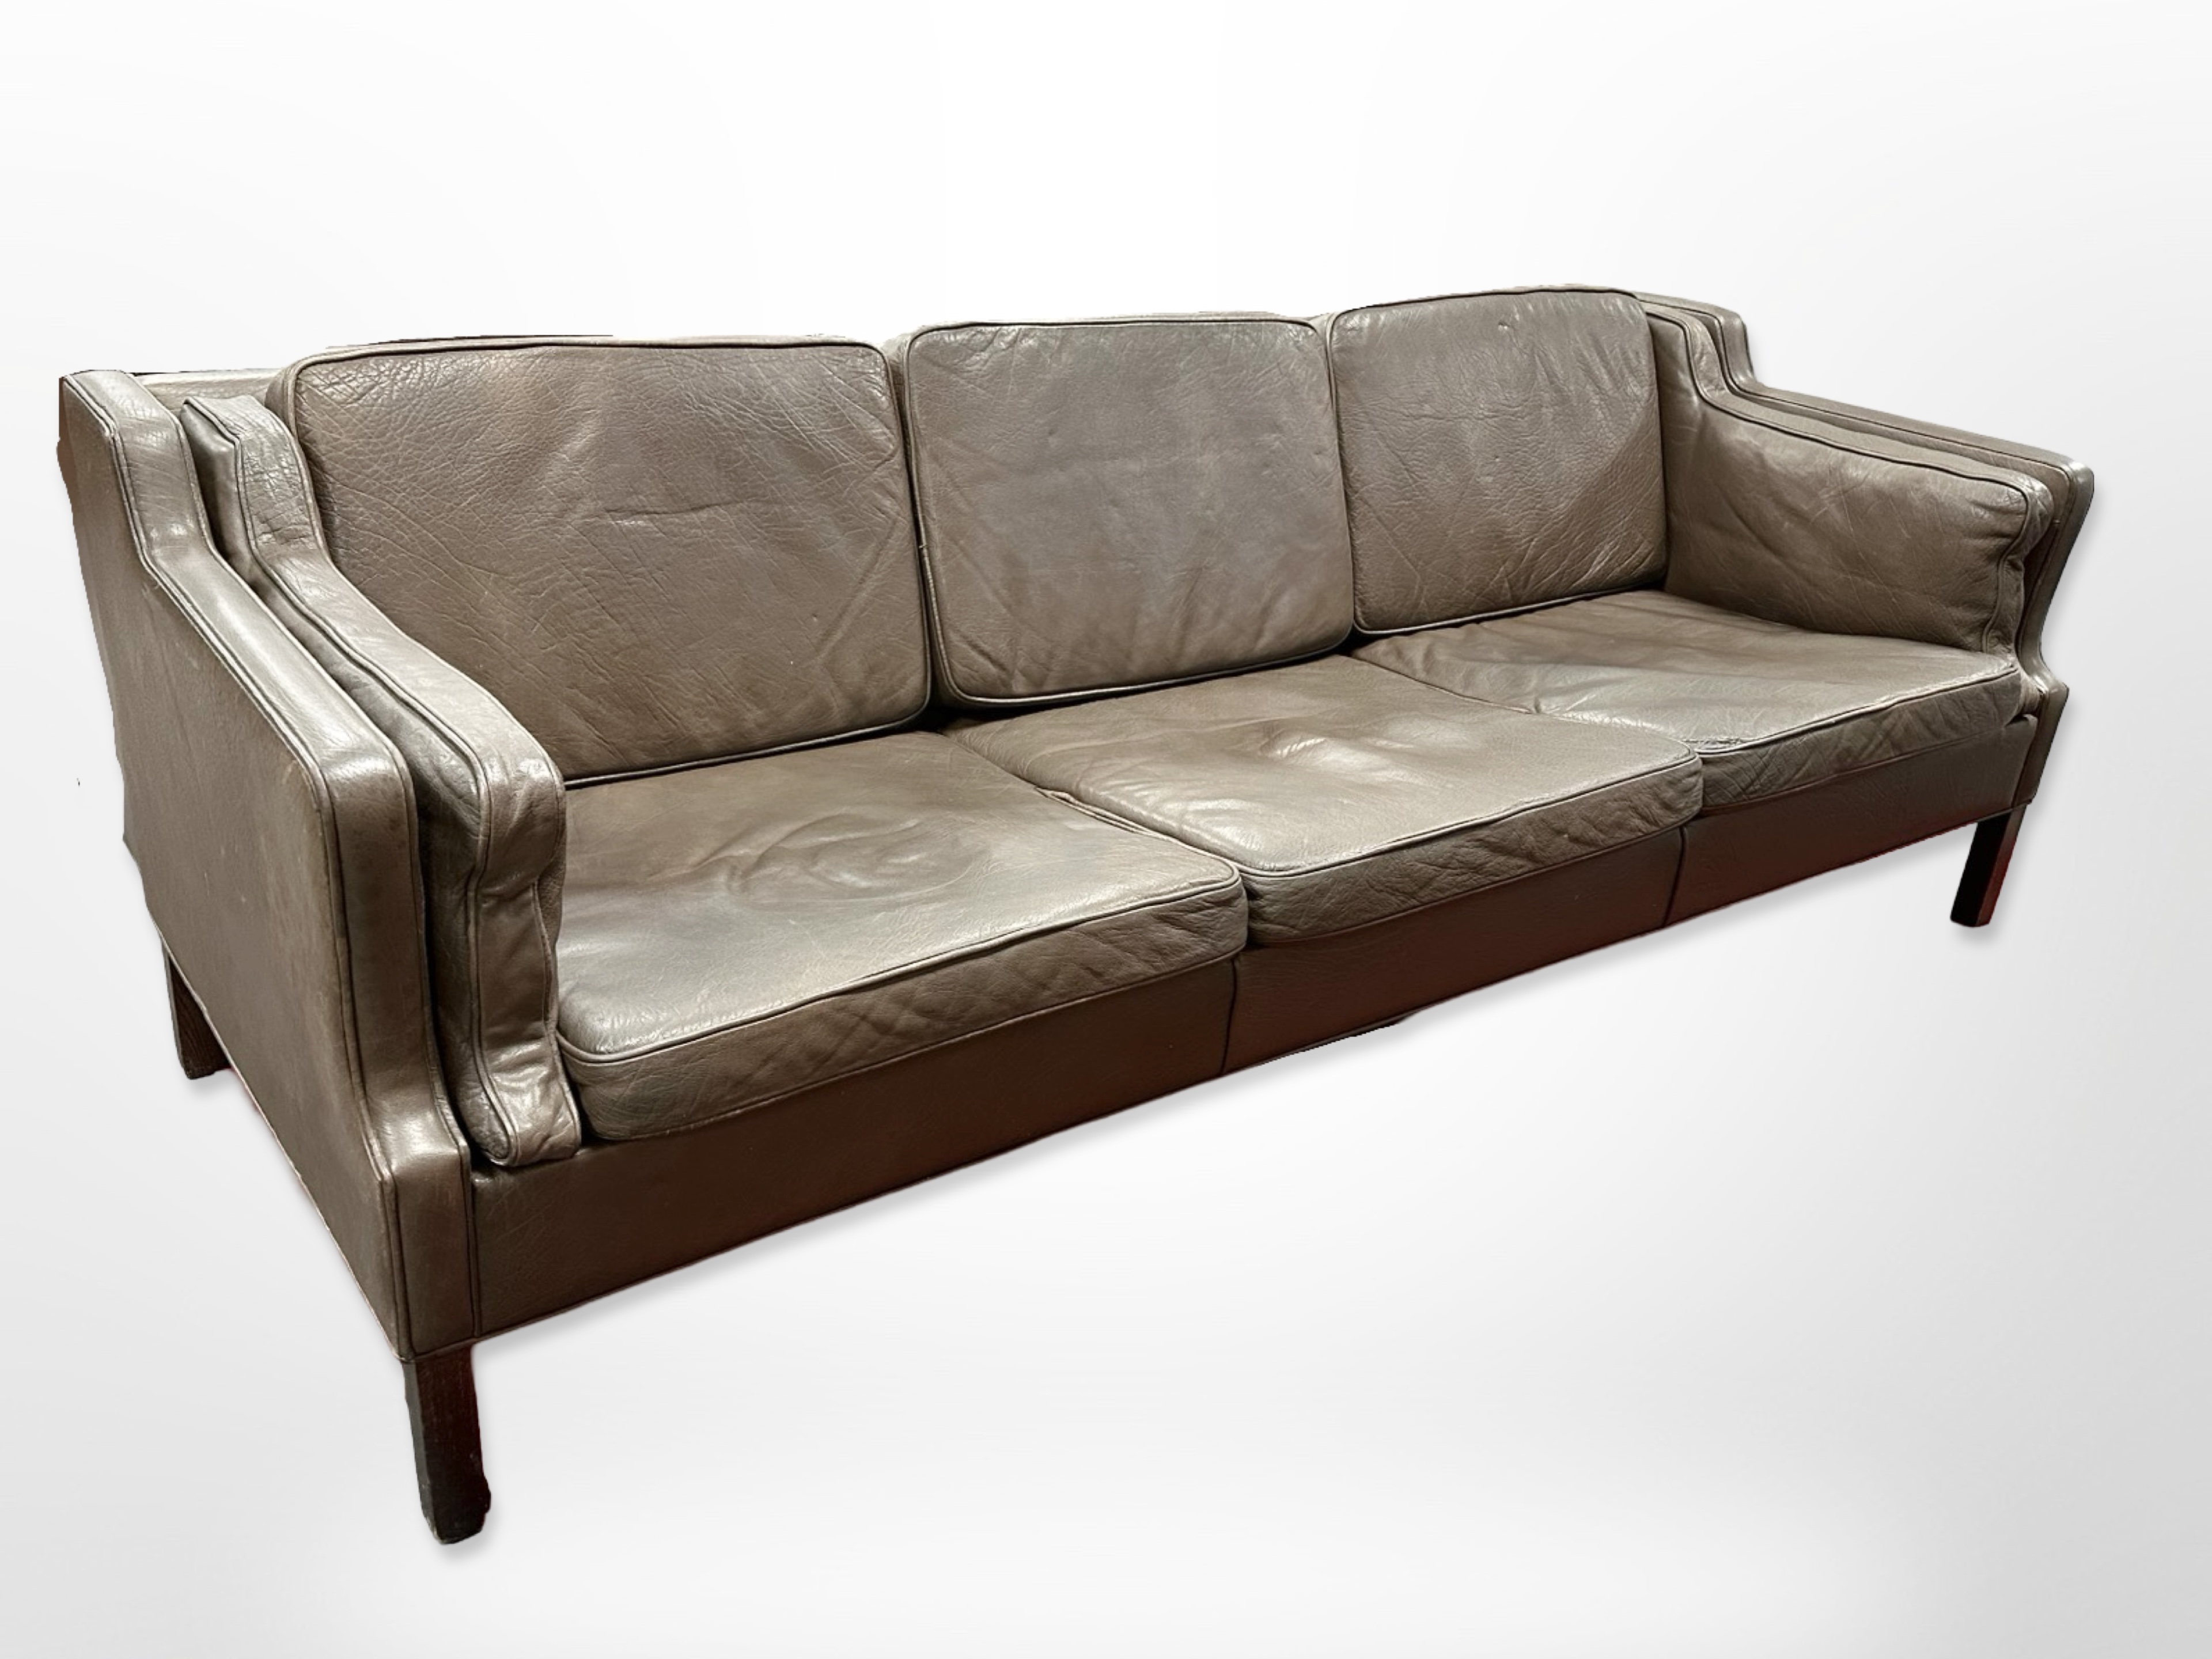 A late 20th-century Danish dark brown leather three-seater settee,